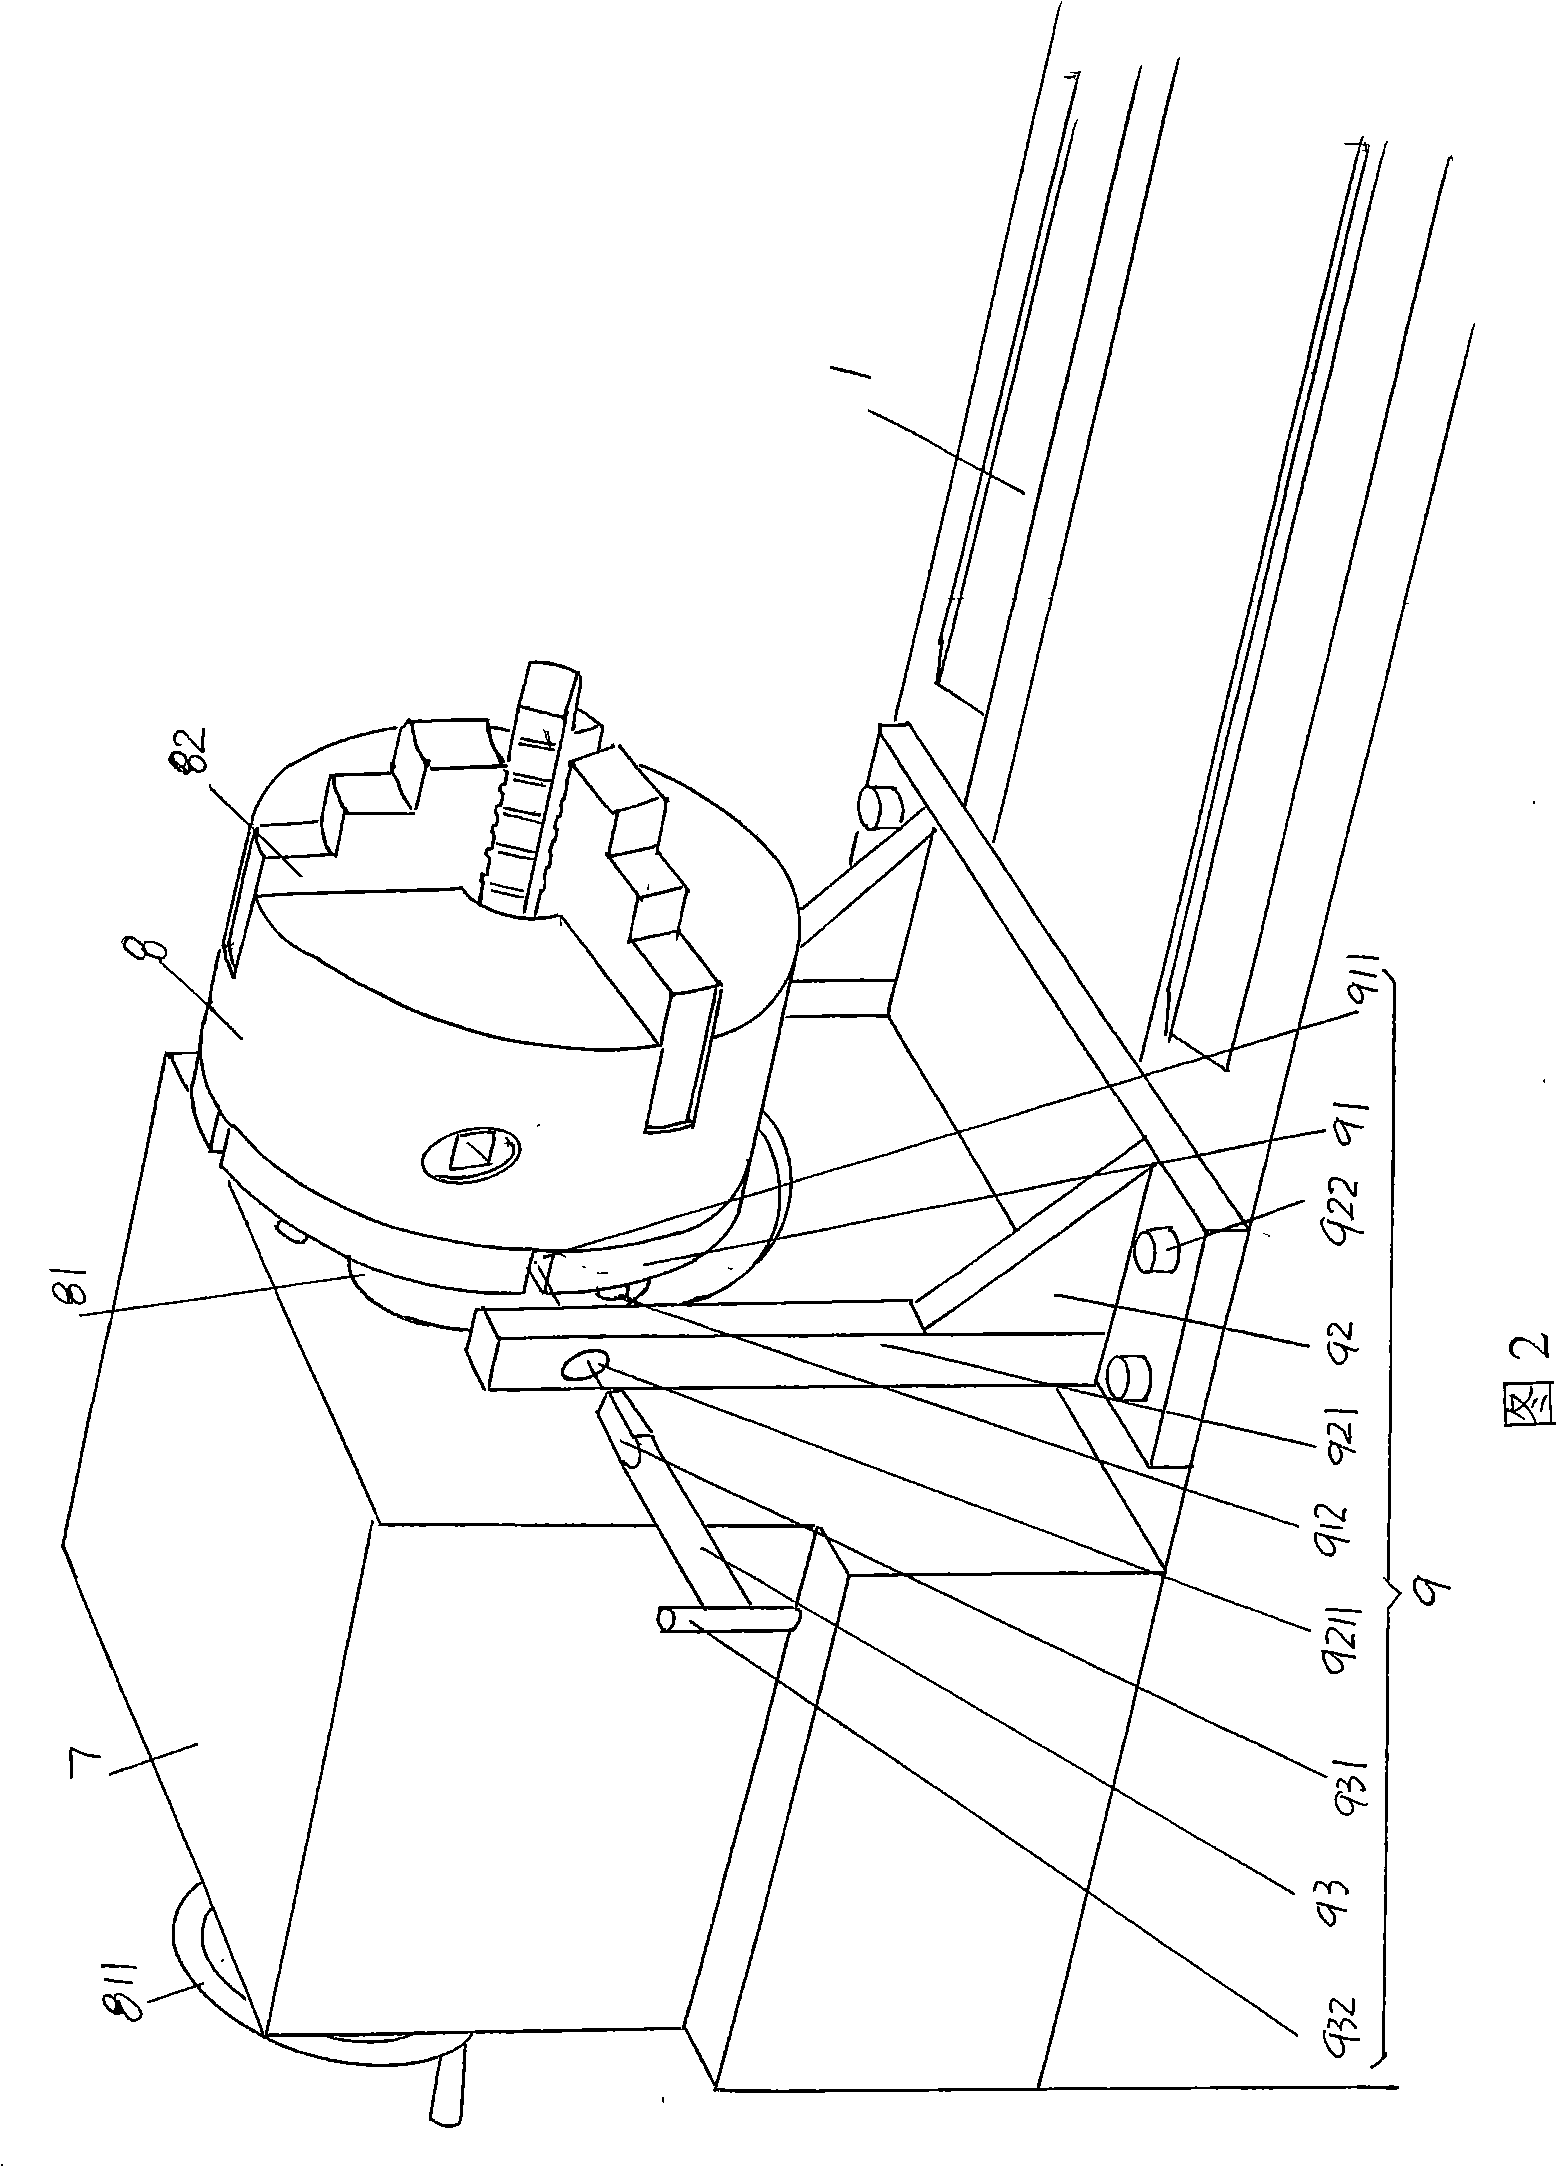 Mill deltoid device